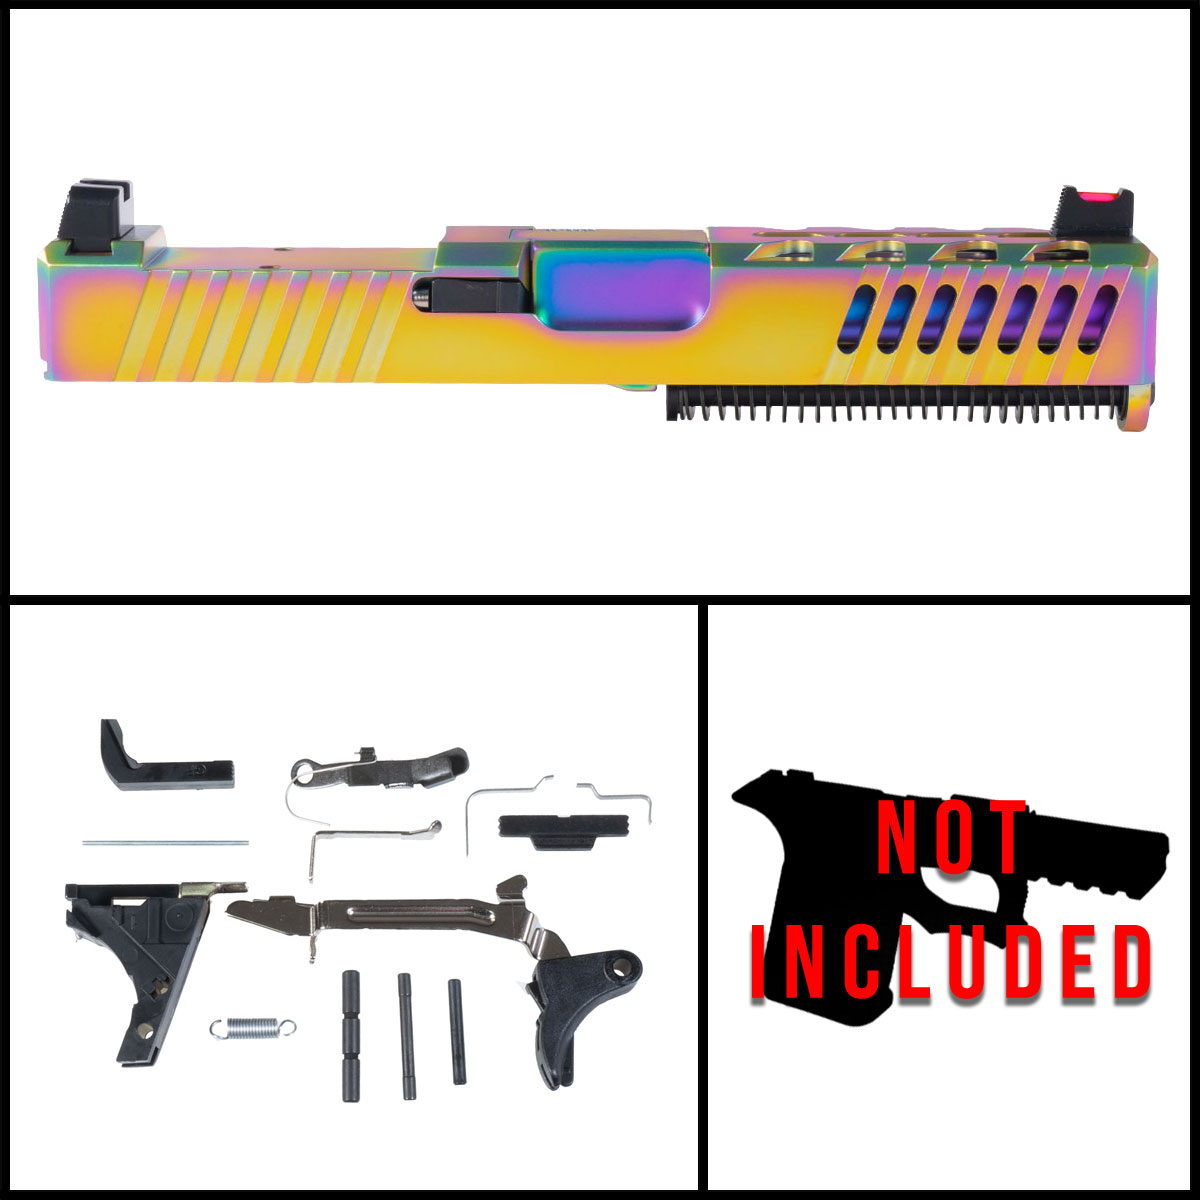 DTT 'Polychrome Pursuit' 9mm Full Pistol Build Kits (Everything Minus Frame) - Glock 19 Gen 1-3 Compatible